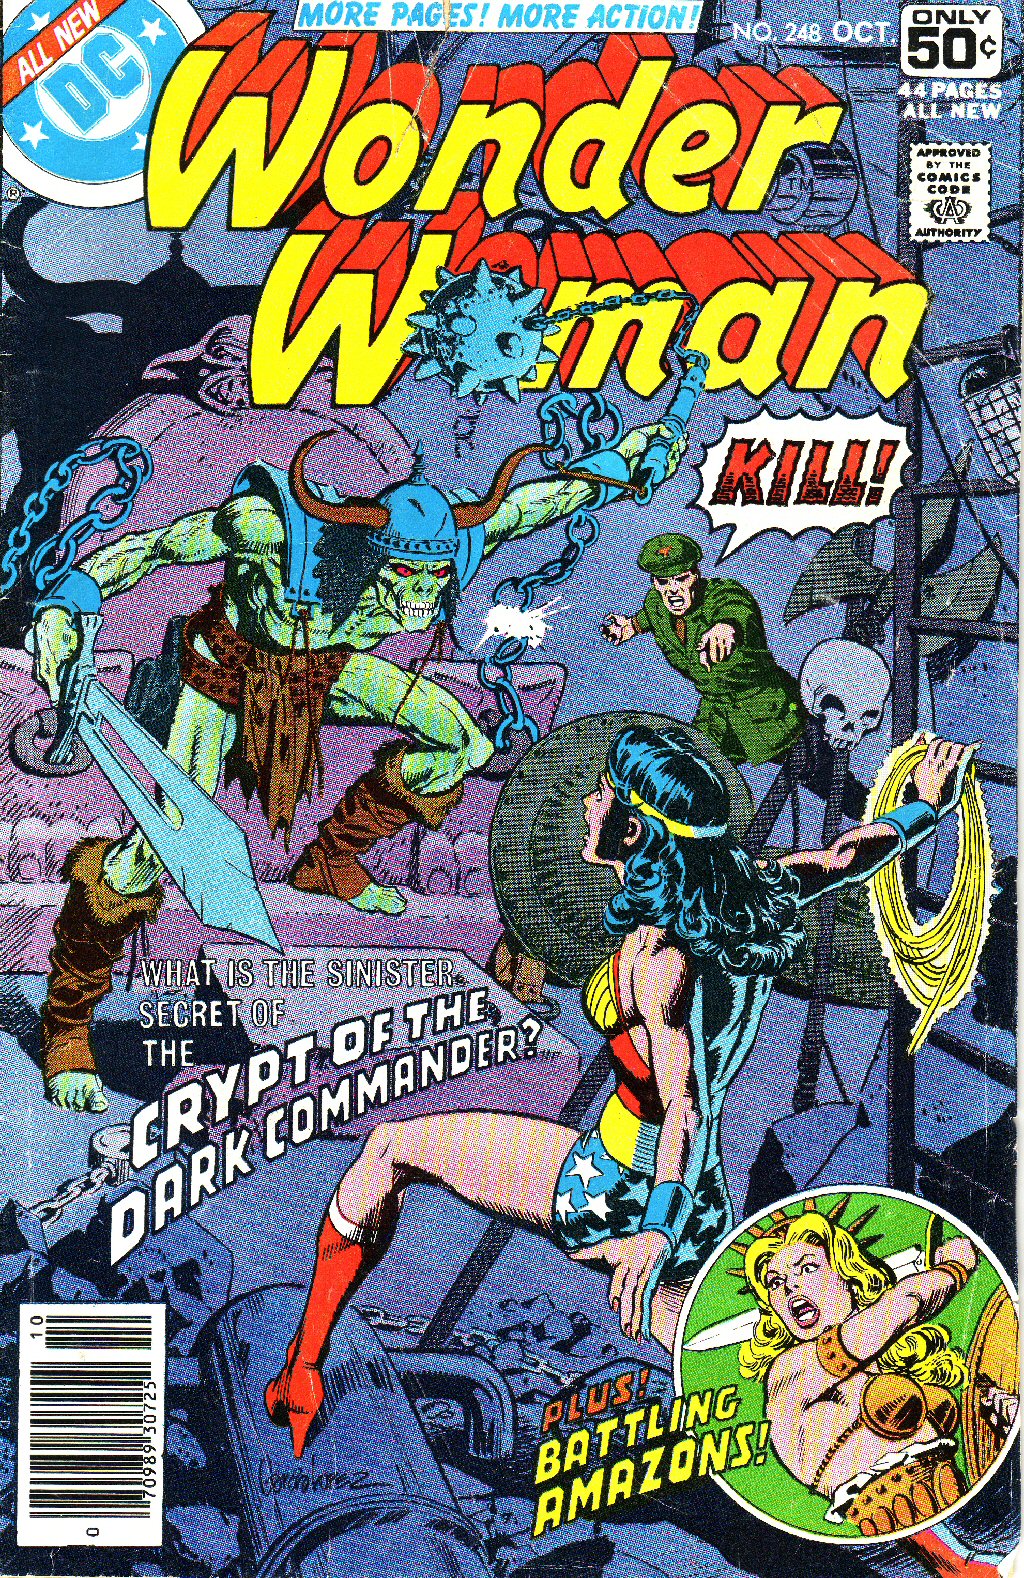 Read online Wonder Woman (1942) comic -  Issue #248 - 1